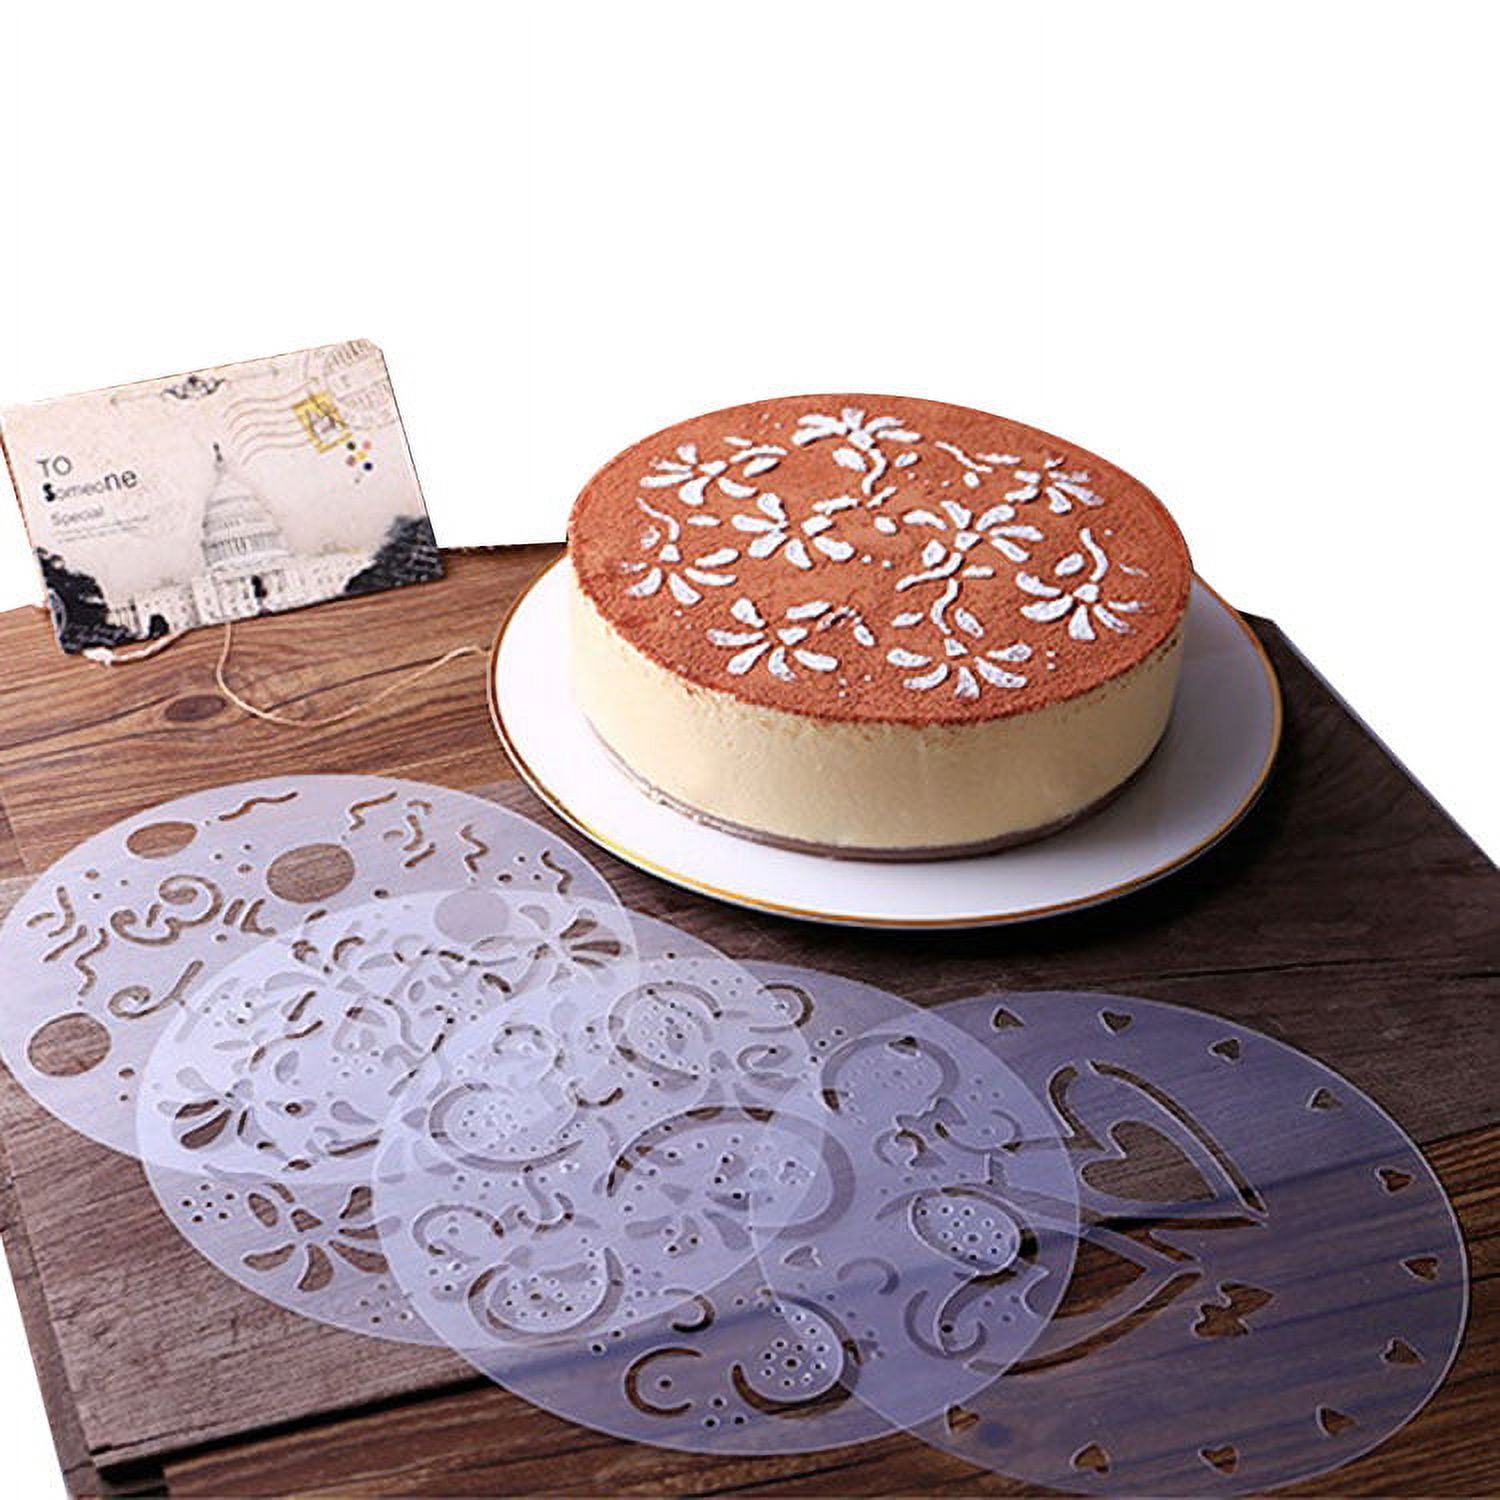 Cake Decorating Stencils & Templates,7 Pcs Decorating Cake Stencil Tool Cake Side Pattern Stencils for Buttercream Lace Cake Border Stencils DIY